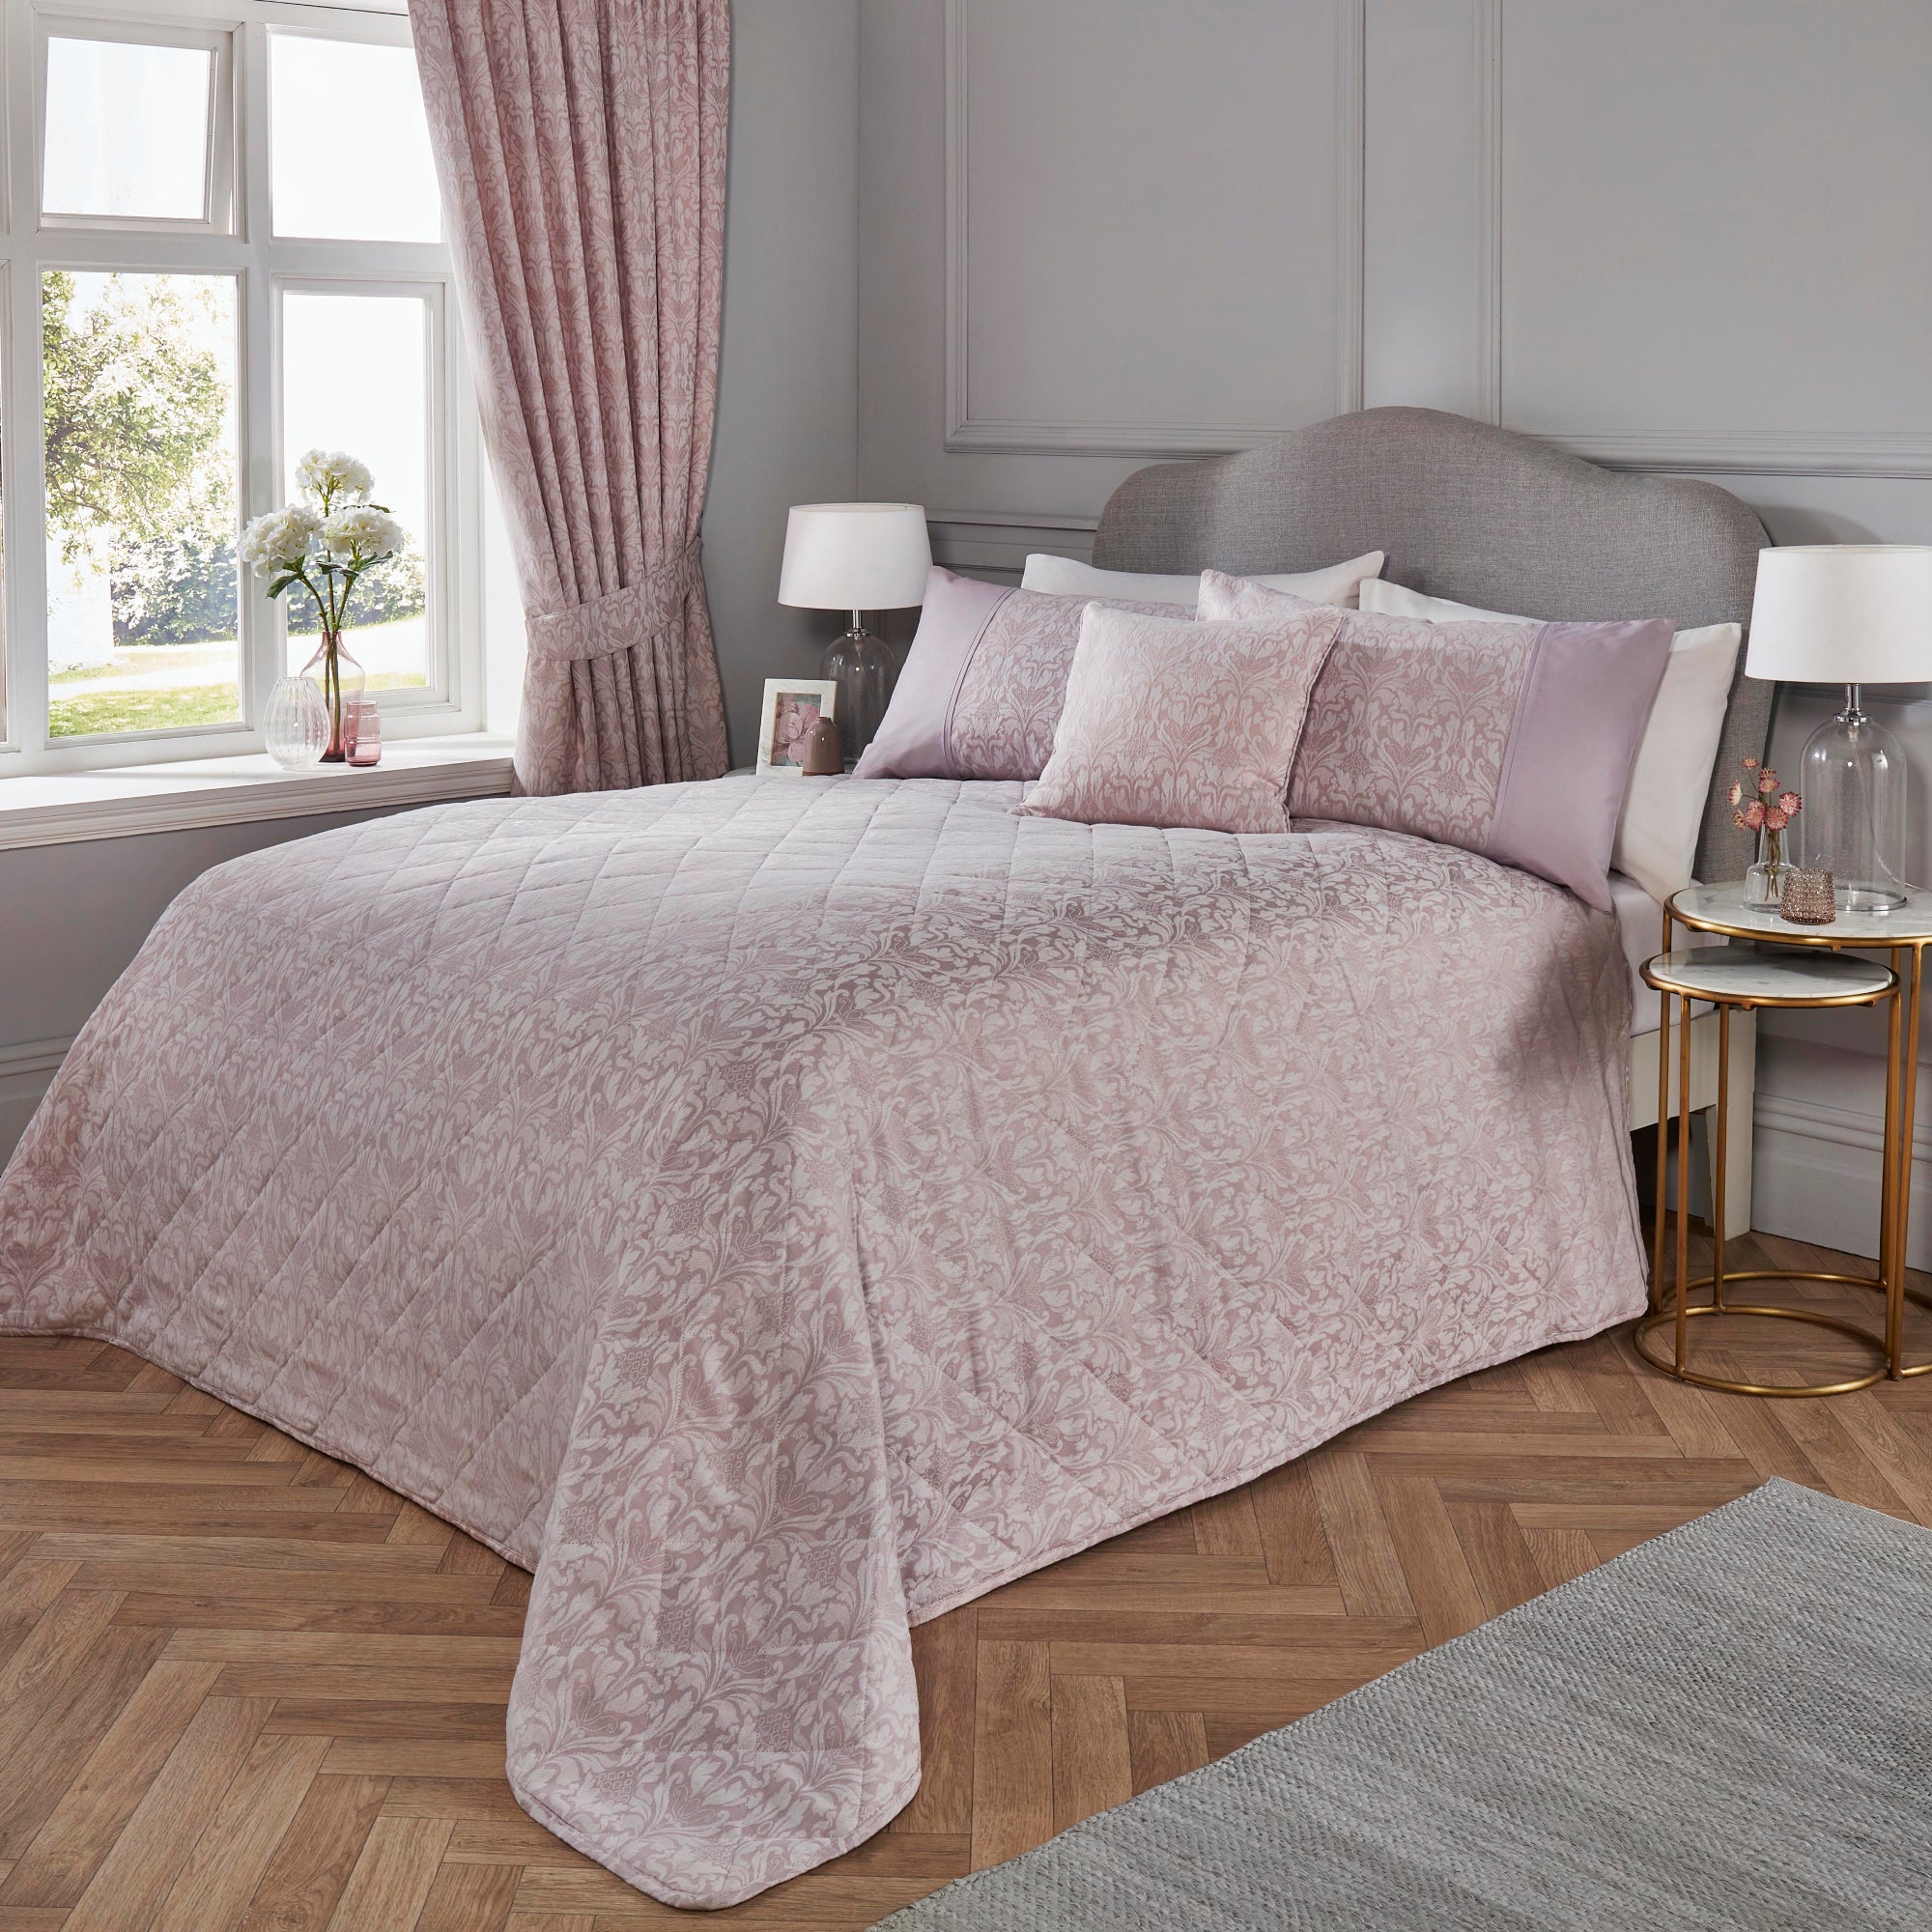 Photos - Bed Woven Hawthorne Bedspread 220cm x 240cm Lavender 